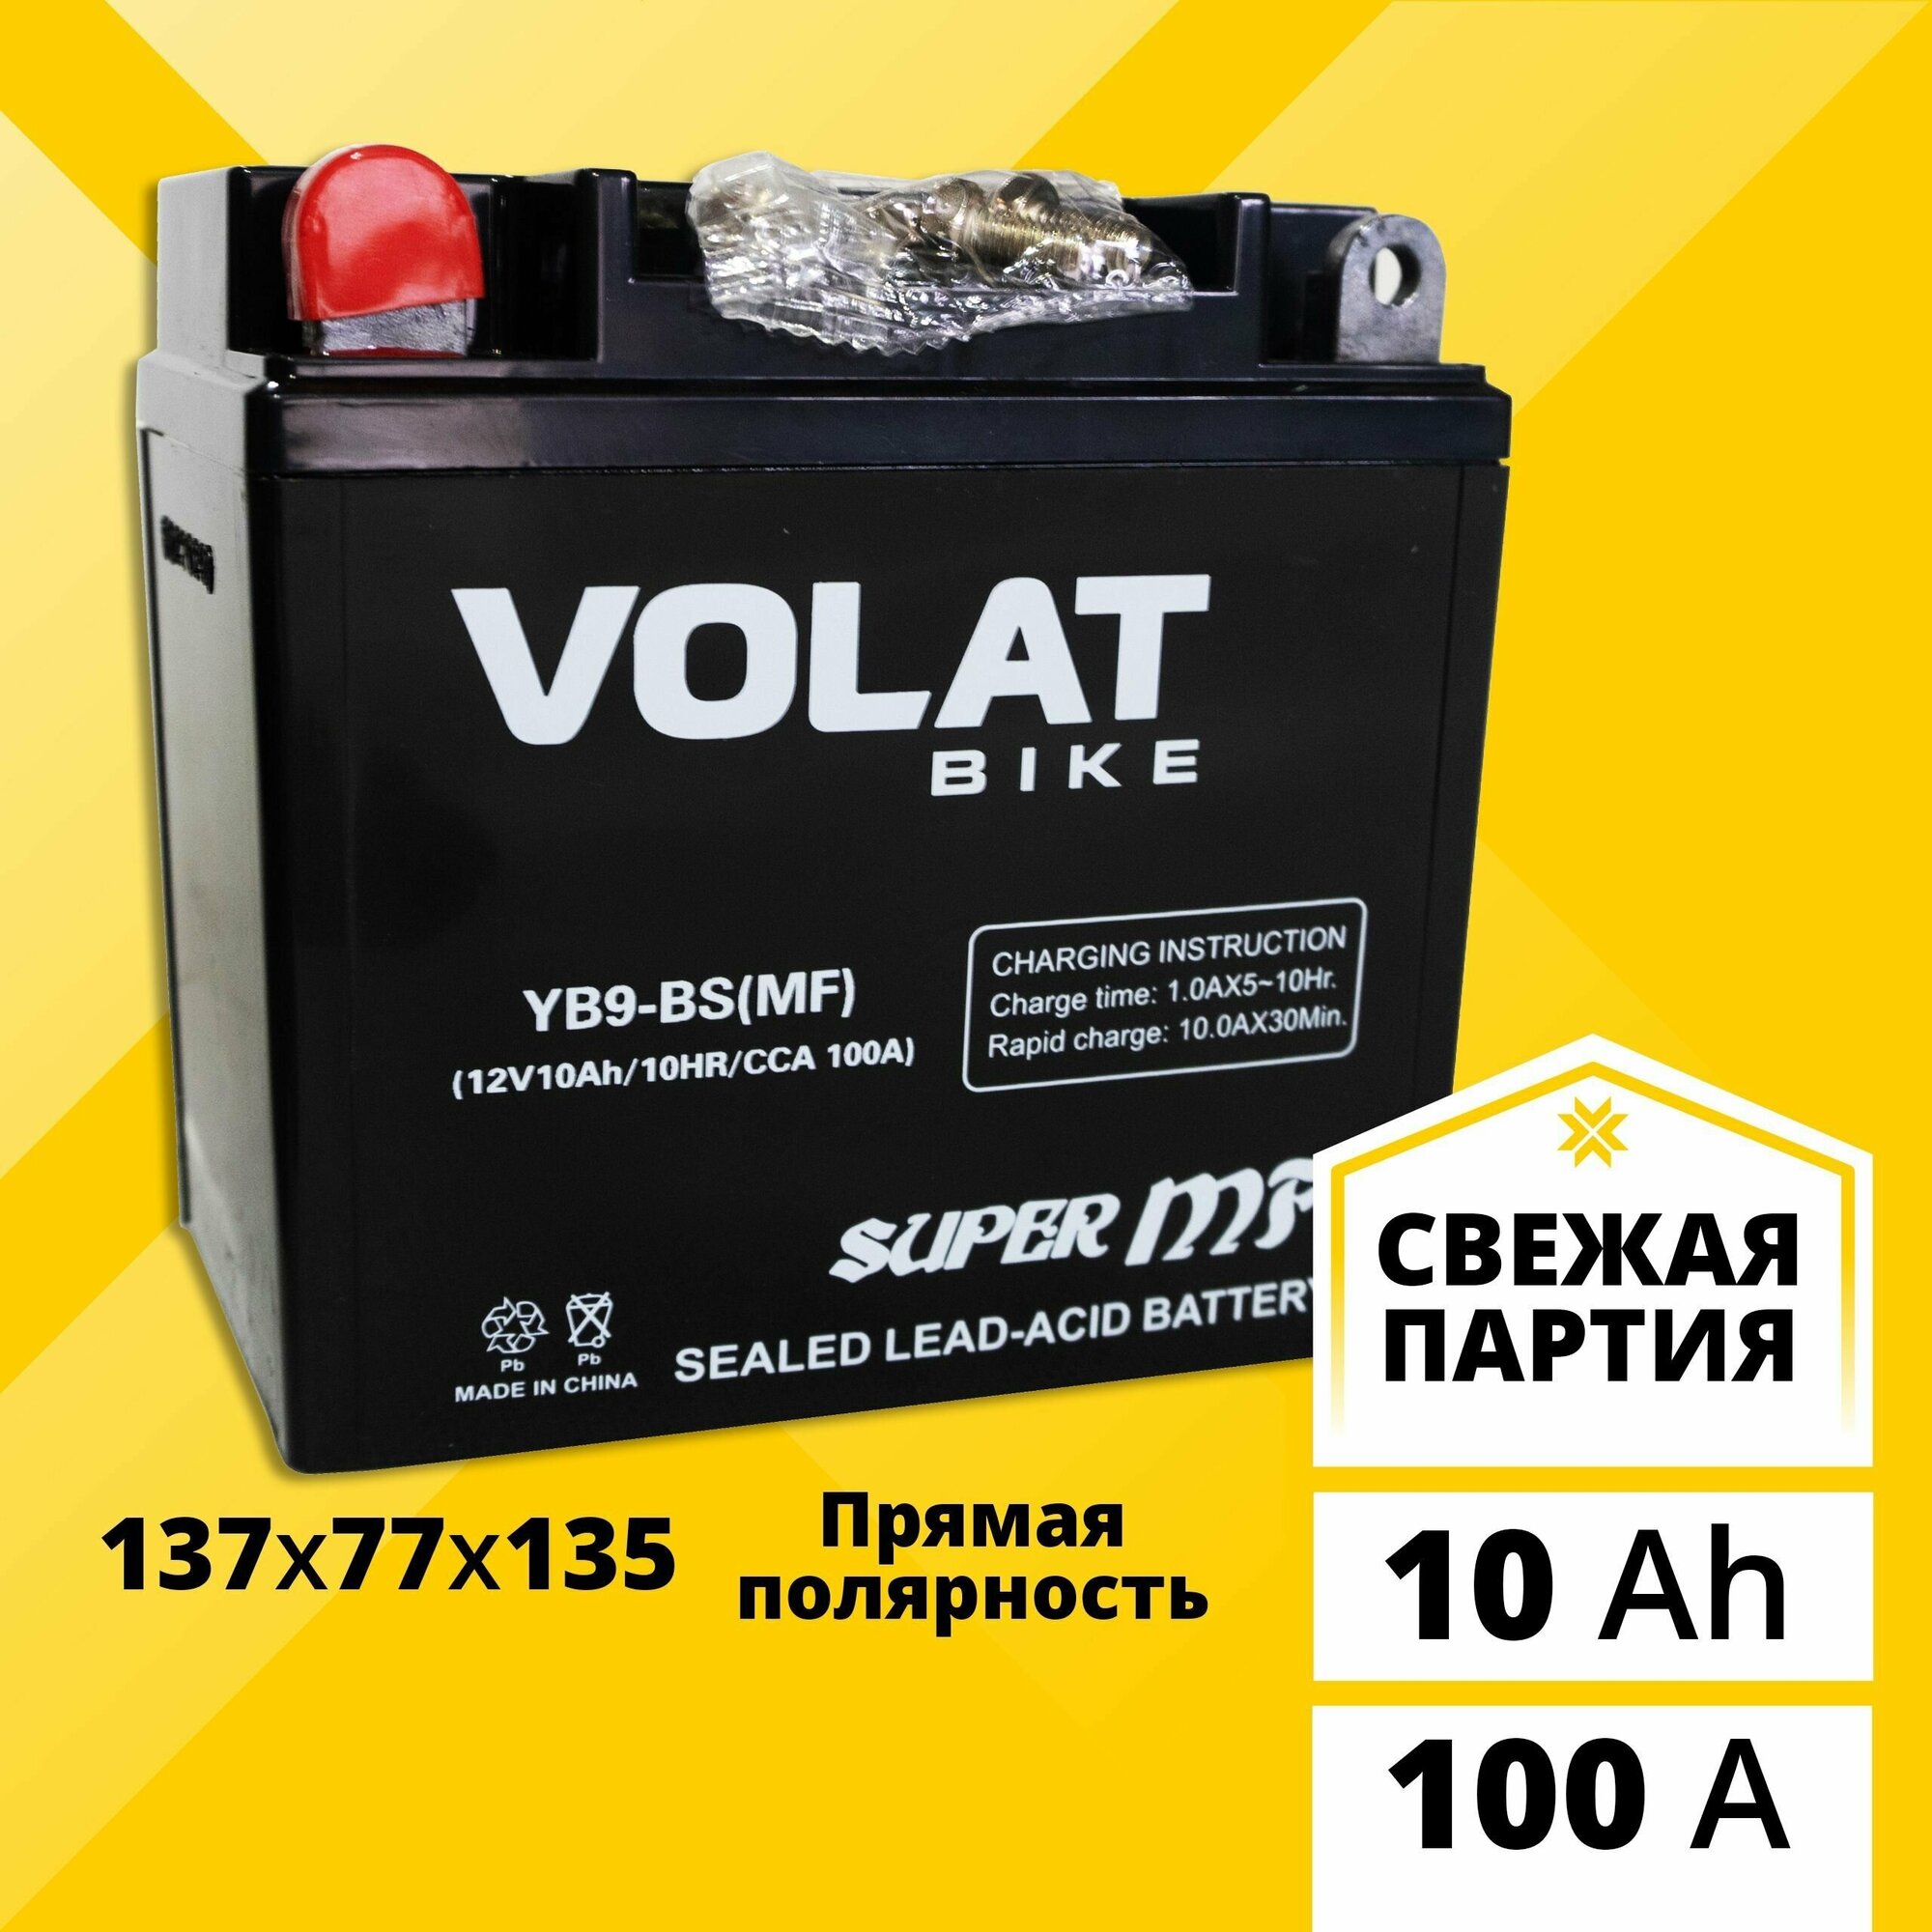 Аккумулятор для мотоцикла 12в 10 Ah 100 A прямая полярность VOLAT YB9-BS (MF) акб для мототехники 12v AGM мопеда скутера квадроцикла 137х77х135